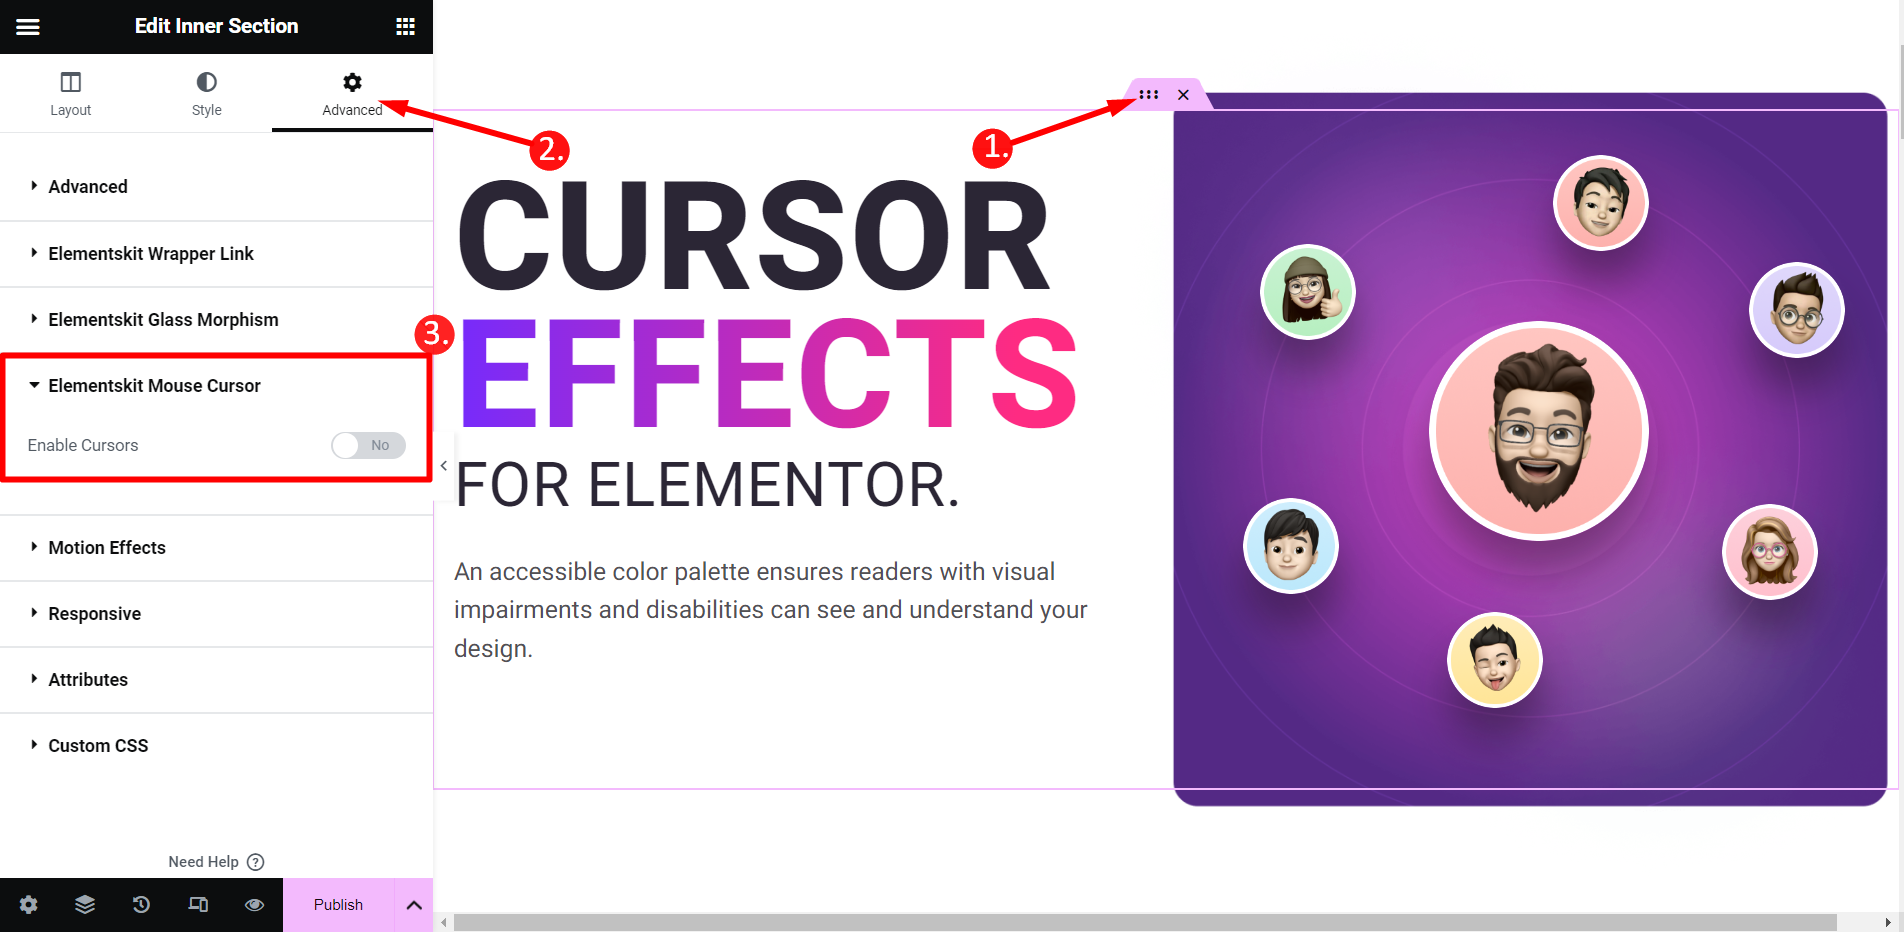 Using ElementsKit mouse cursor